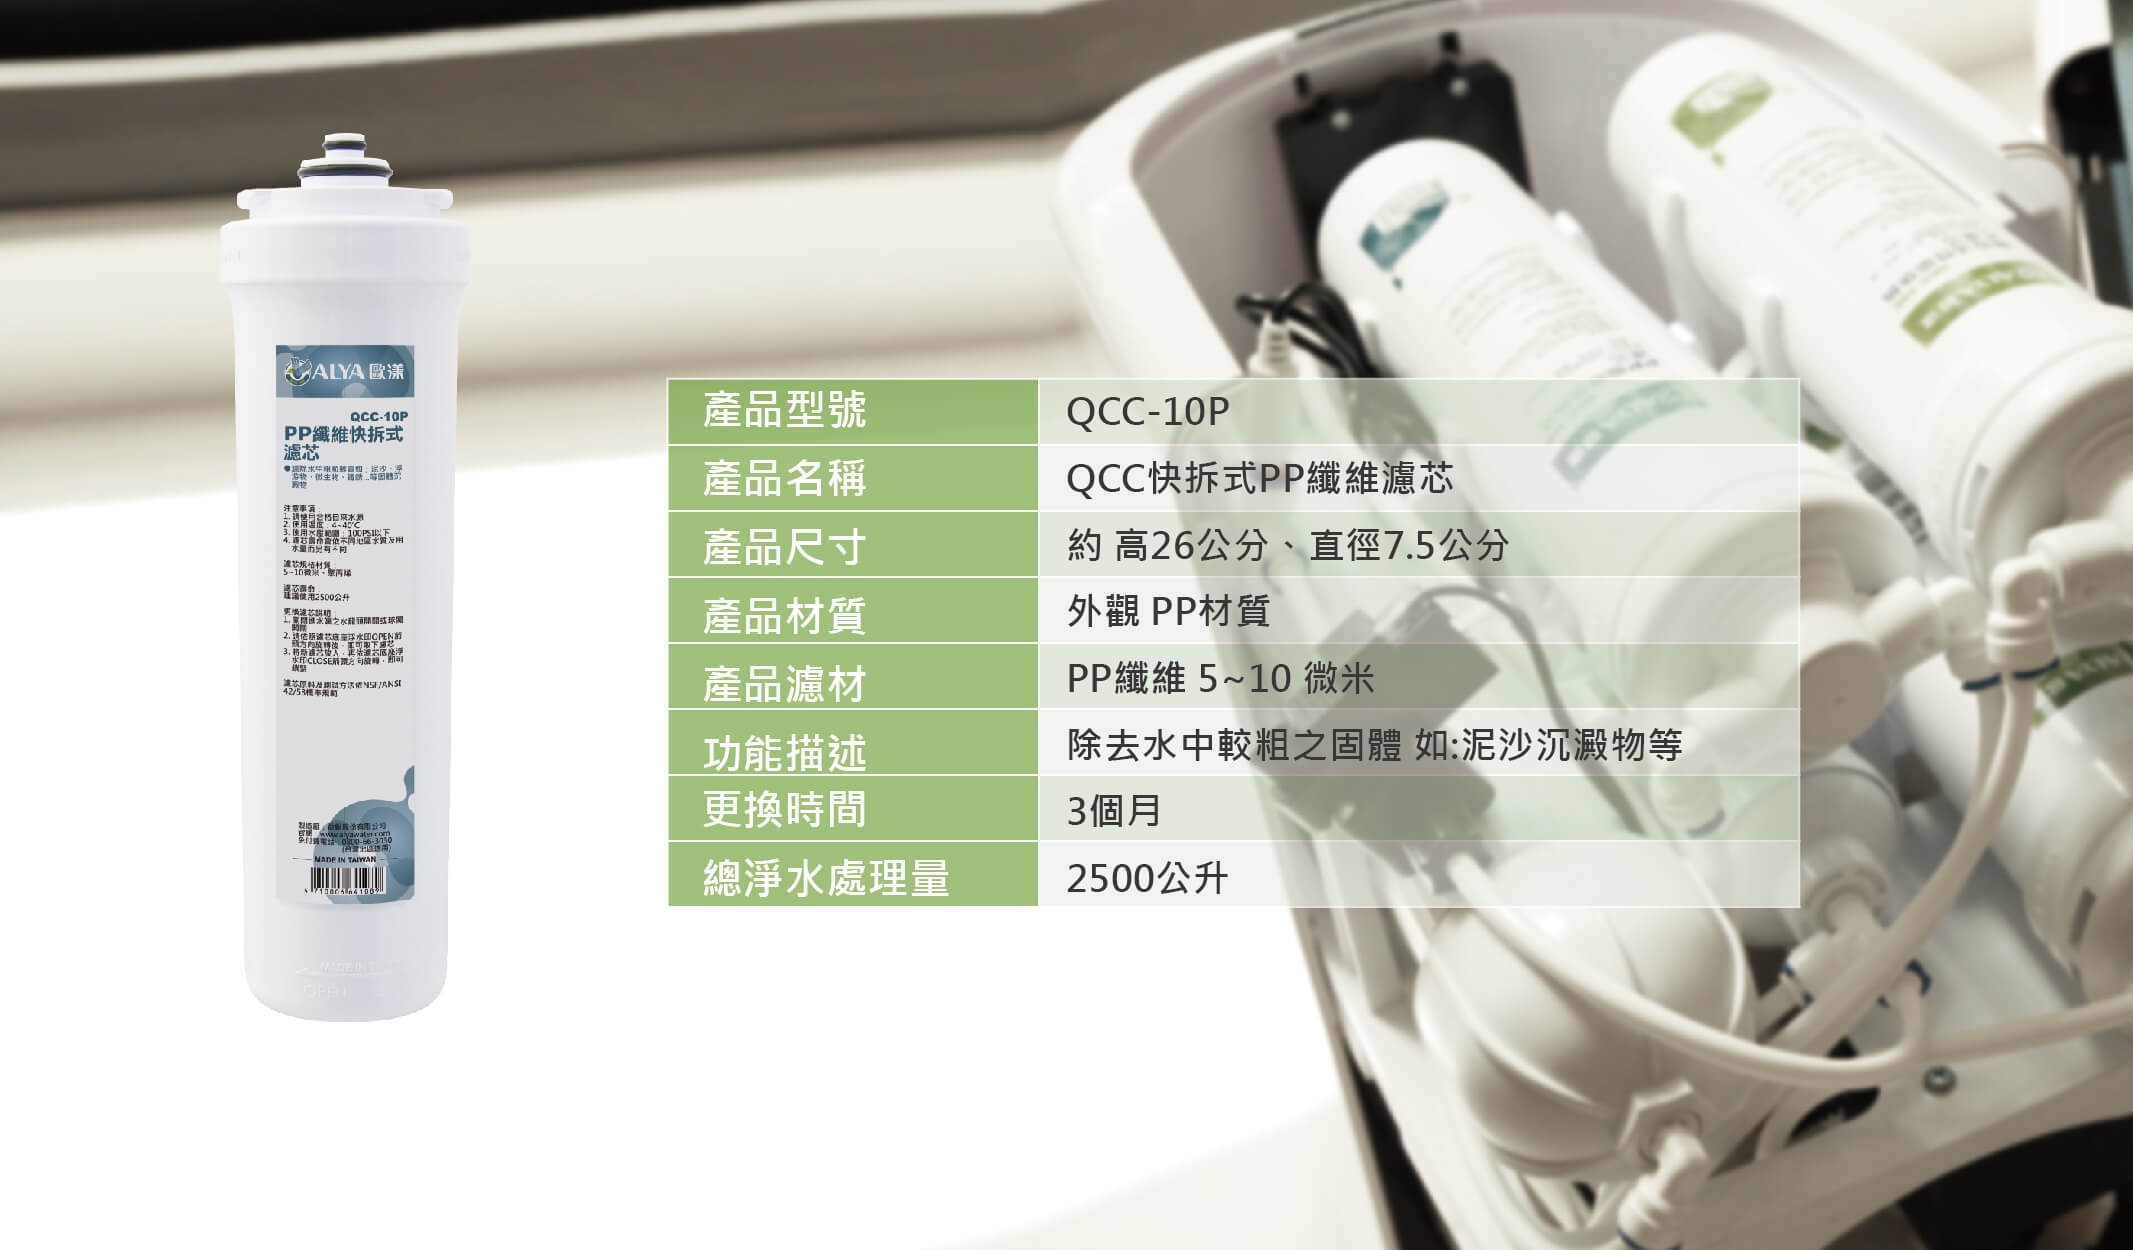 04.QCC-10P_Quick Change Cartridge